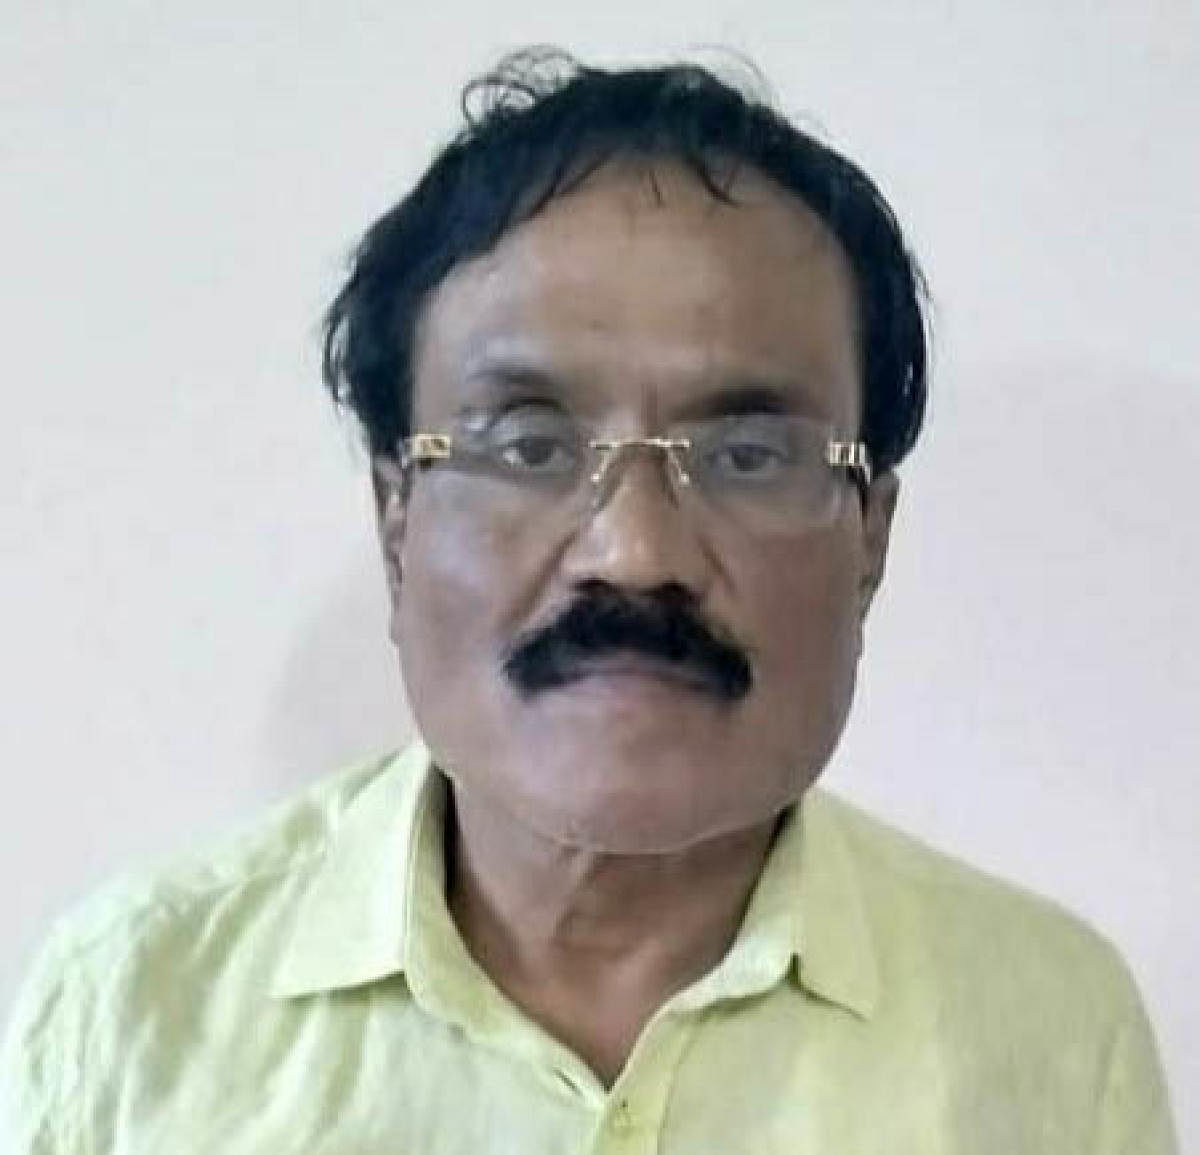 Vijay Akash, the alleged mastermind